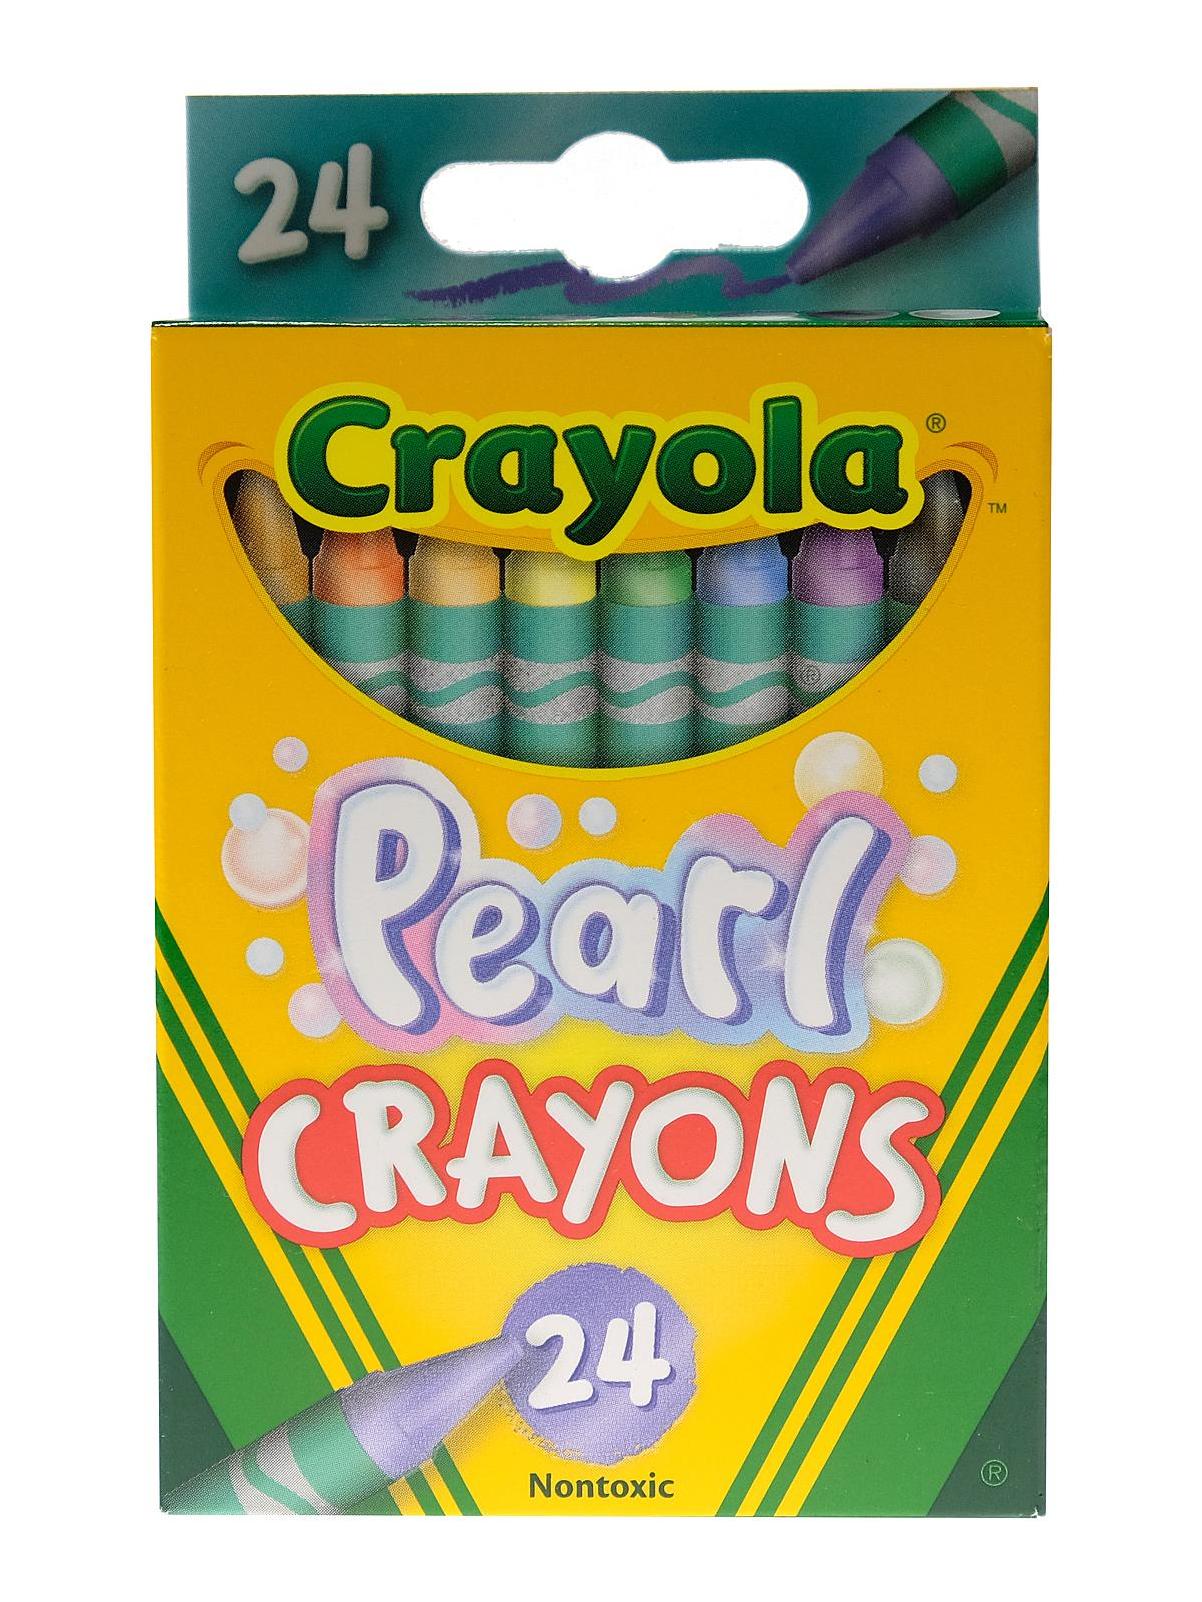 Bangkit Bazic 12 Color Mini Propelling Crayon